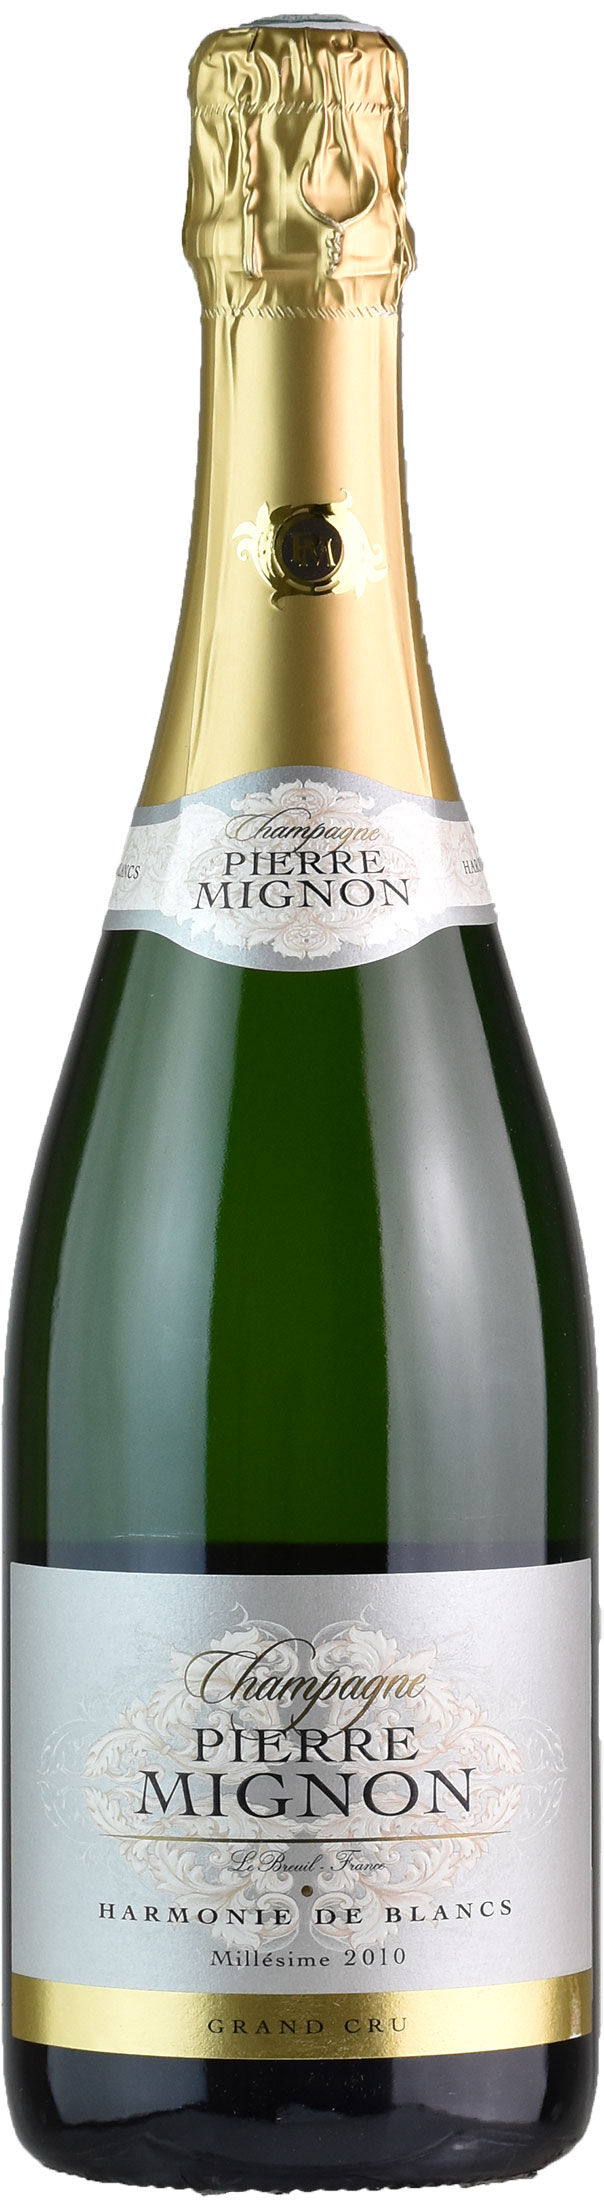 Pierre Mignon Champagne Harmonie De Blancs Grand Cru Brut Millesime